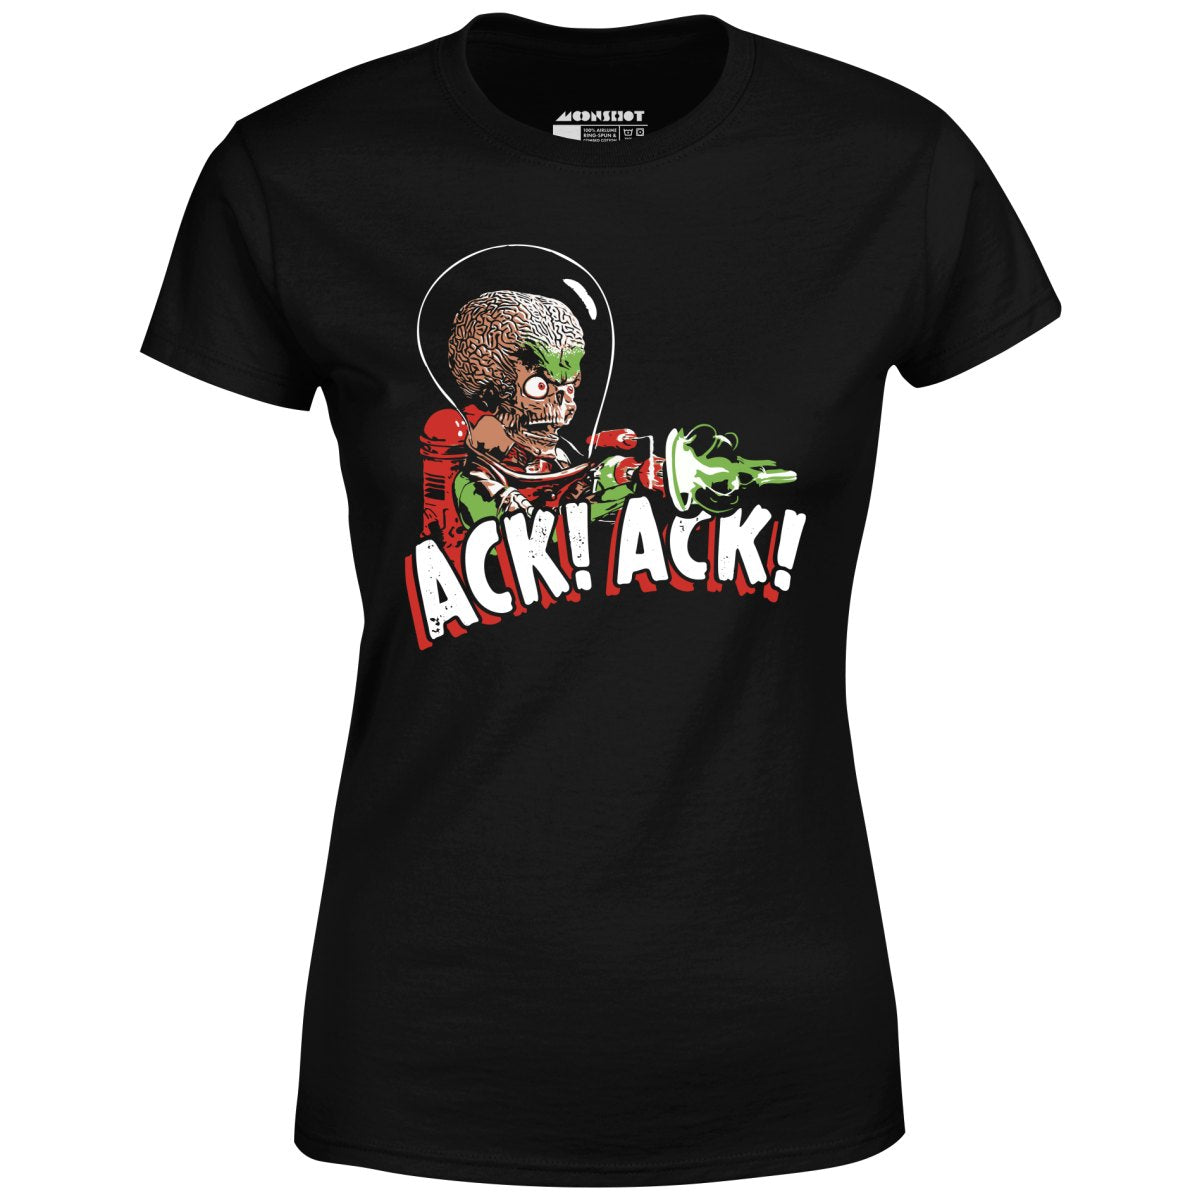 Ack! Ack! - Women's T-Shirt